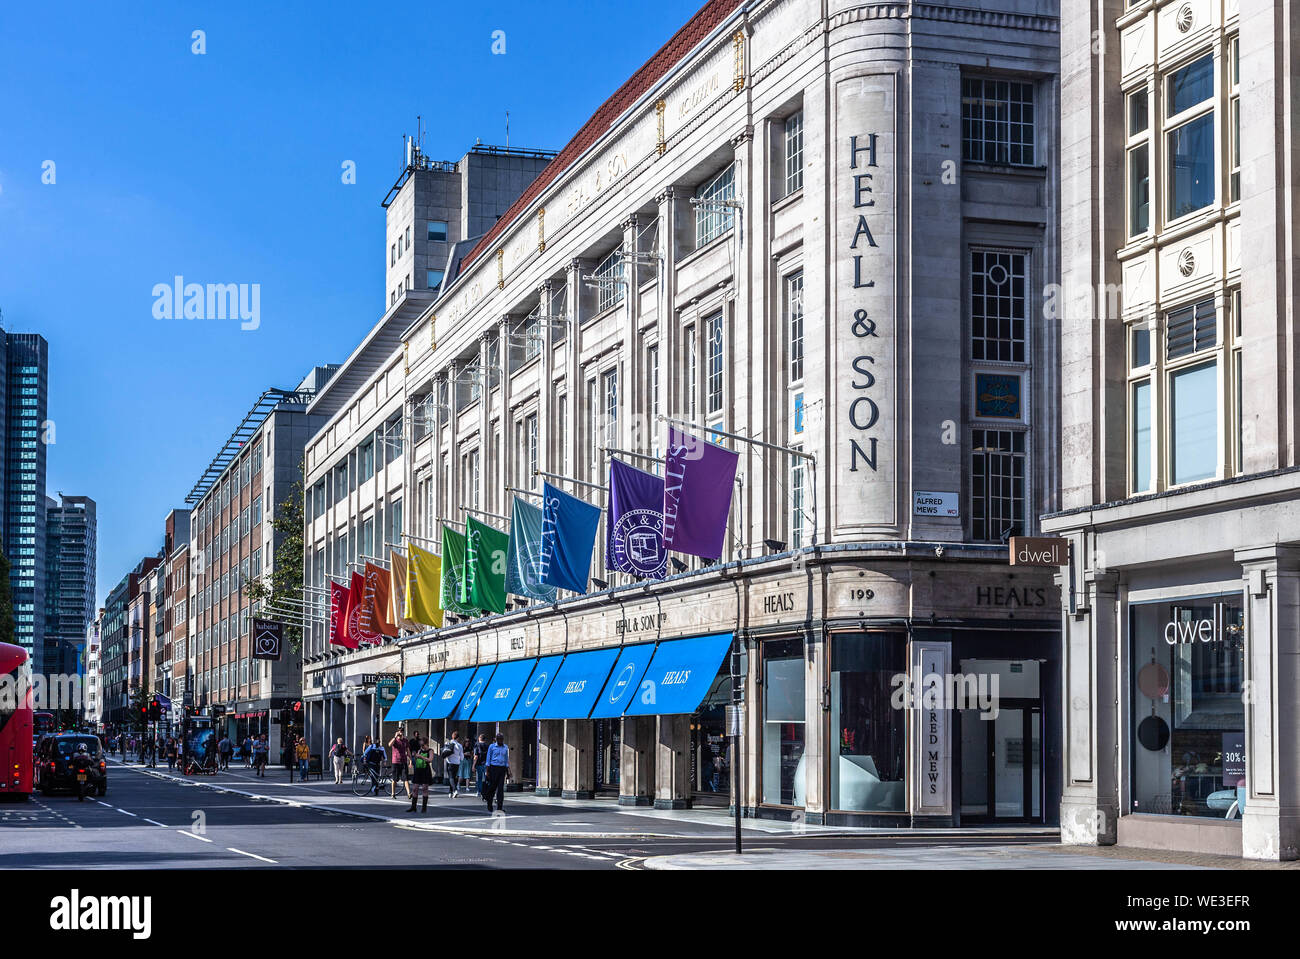 Row of shops along Tottenham Court Road, London, England, UK. Stock Photo